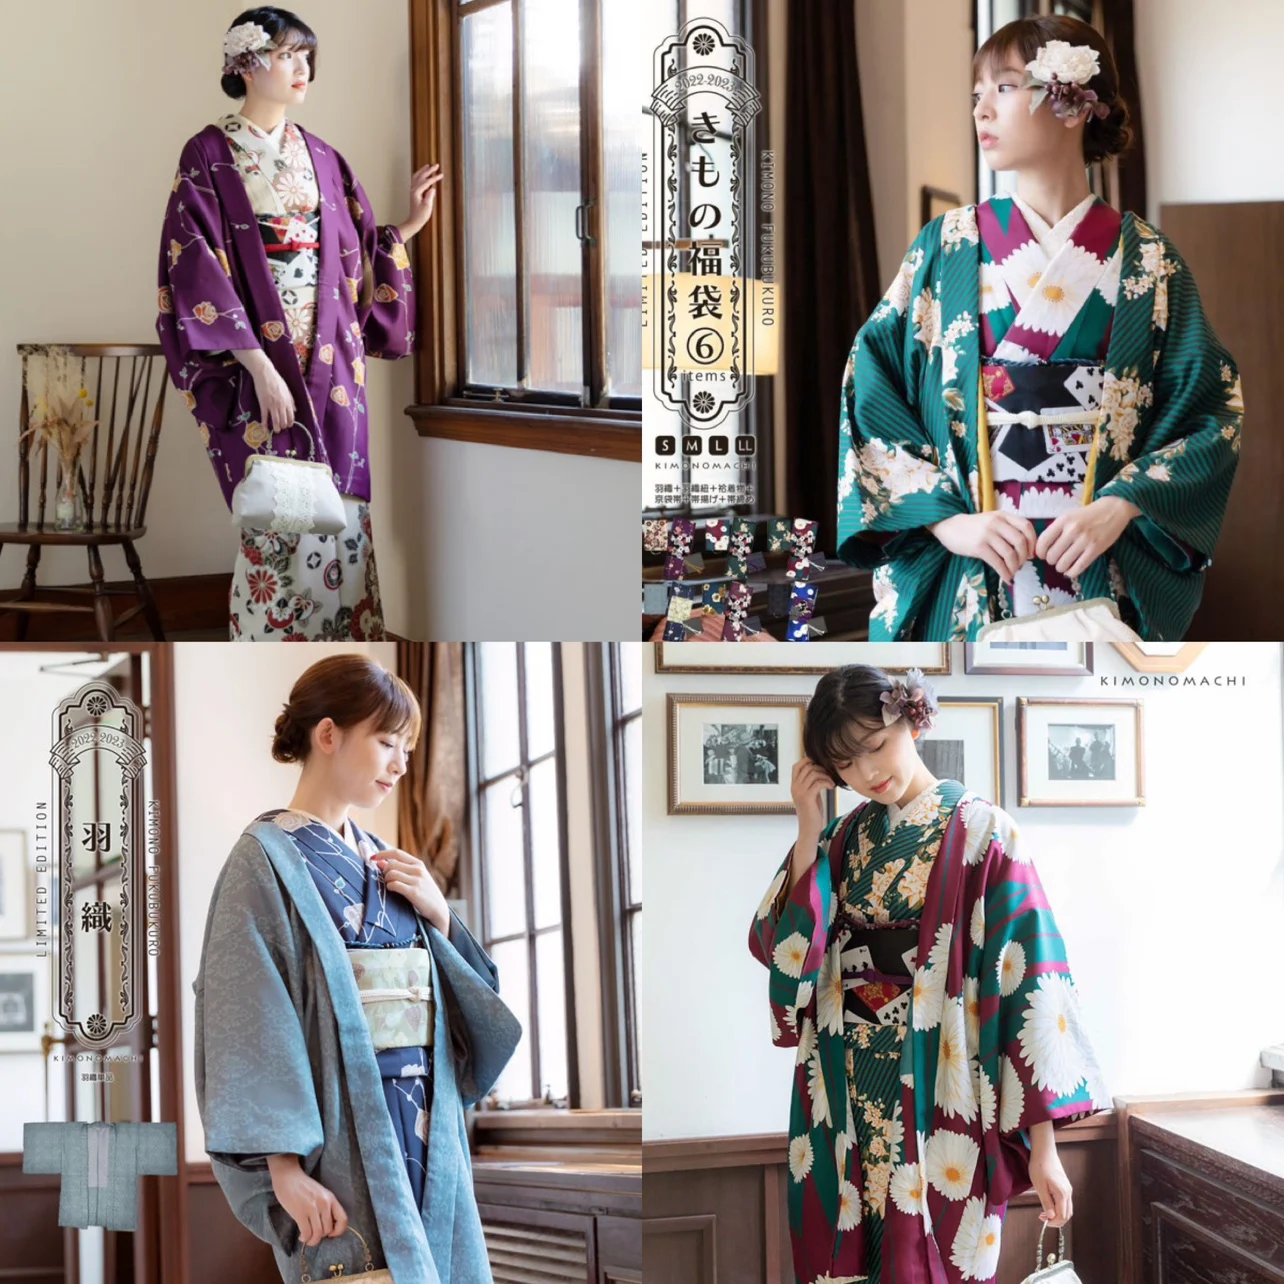 Japan Style Women's Traditional Haori Double Layer Floral Prints Autumn/Winter Outerwear Classic Kimono Coat